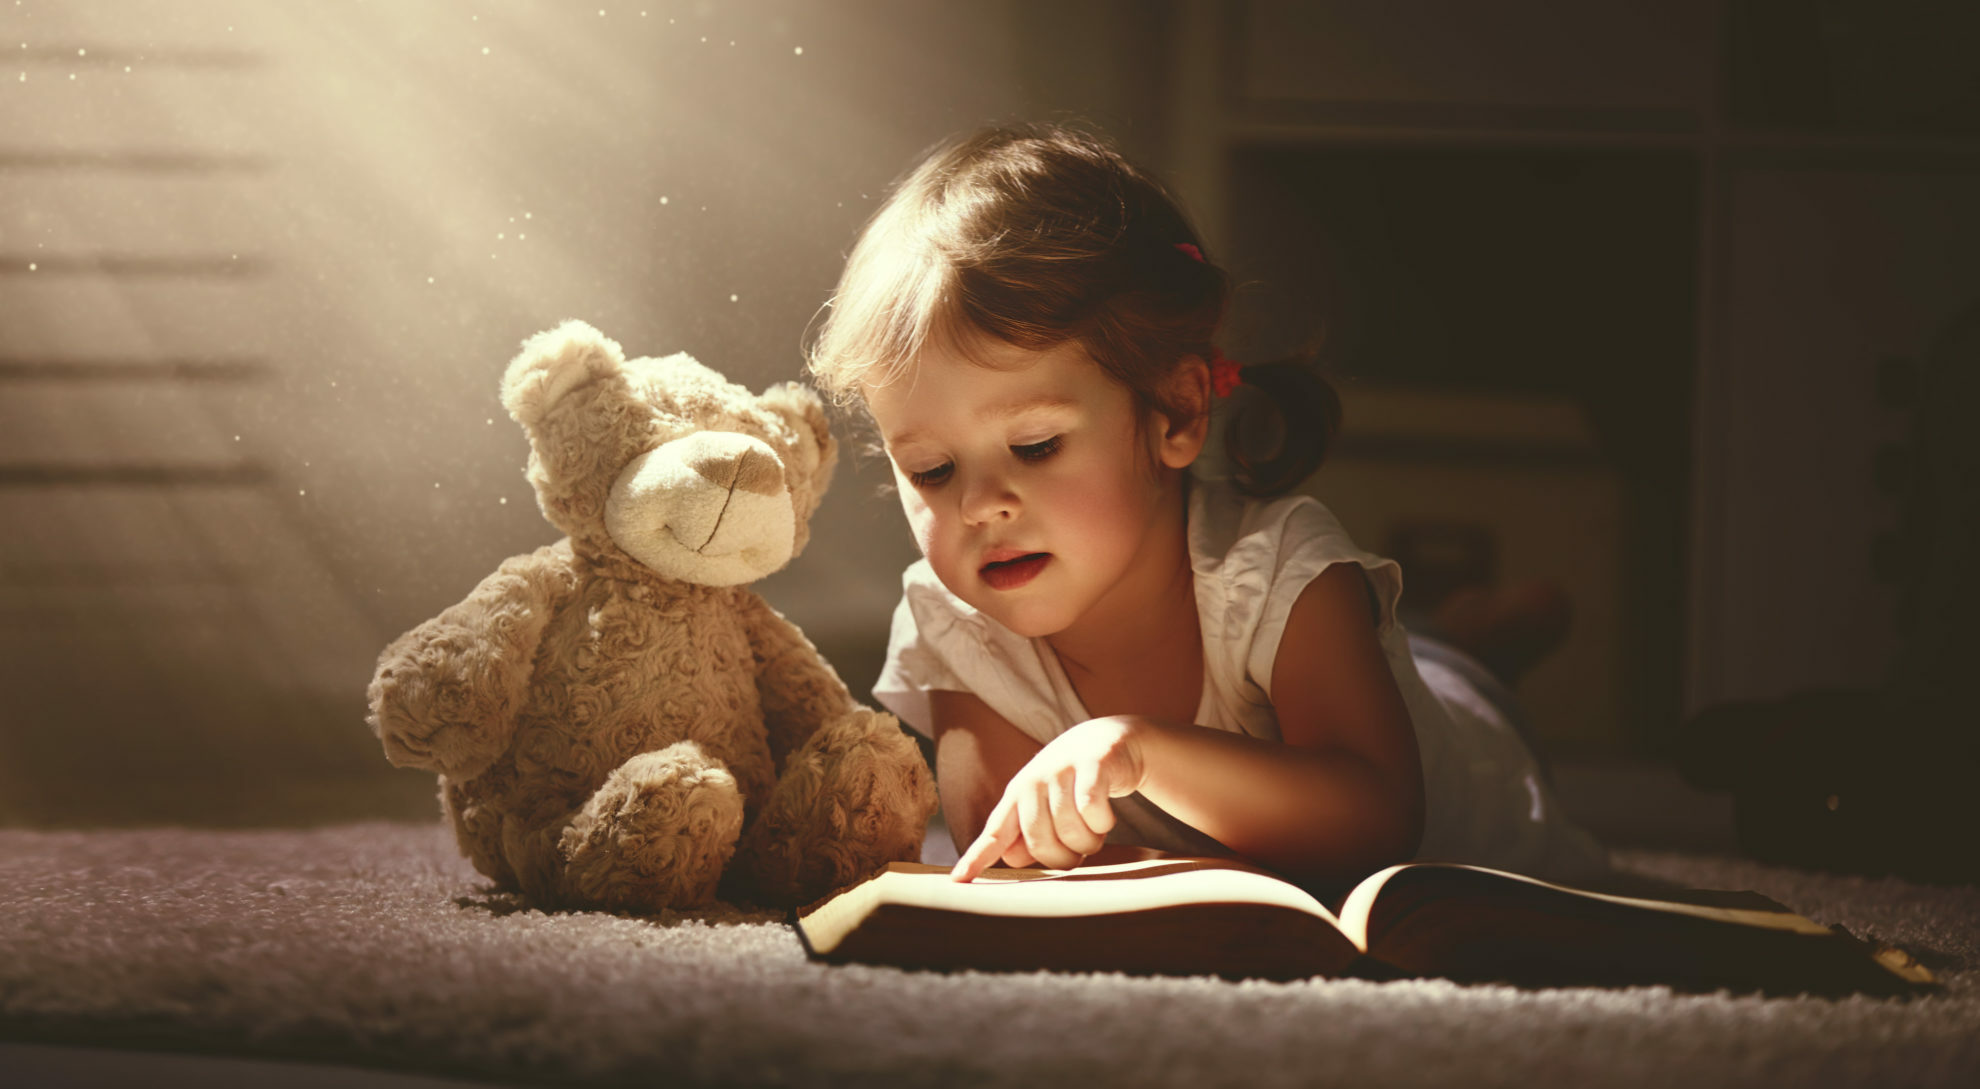 podignite dete koje voli da čita | porodica i vaspitanje dece, zdravlje i prevencija, magazin